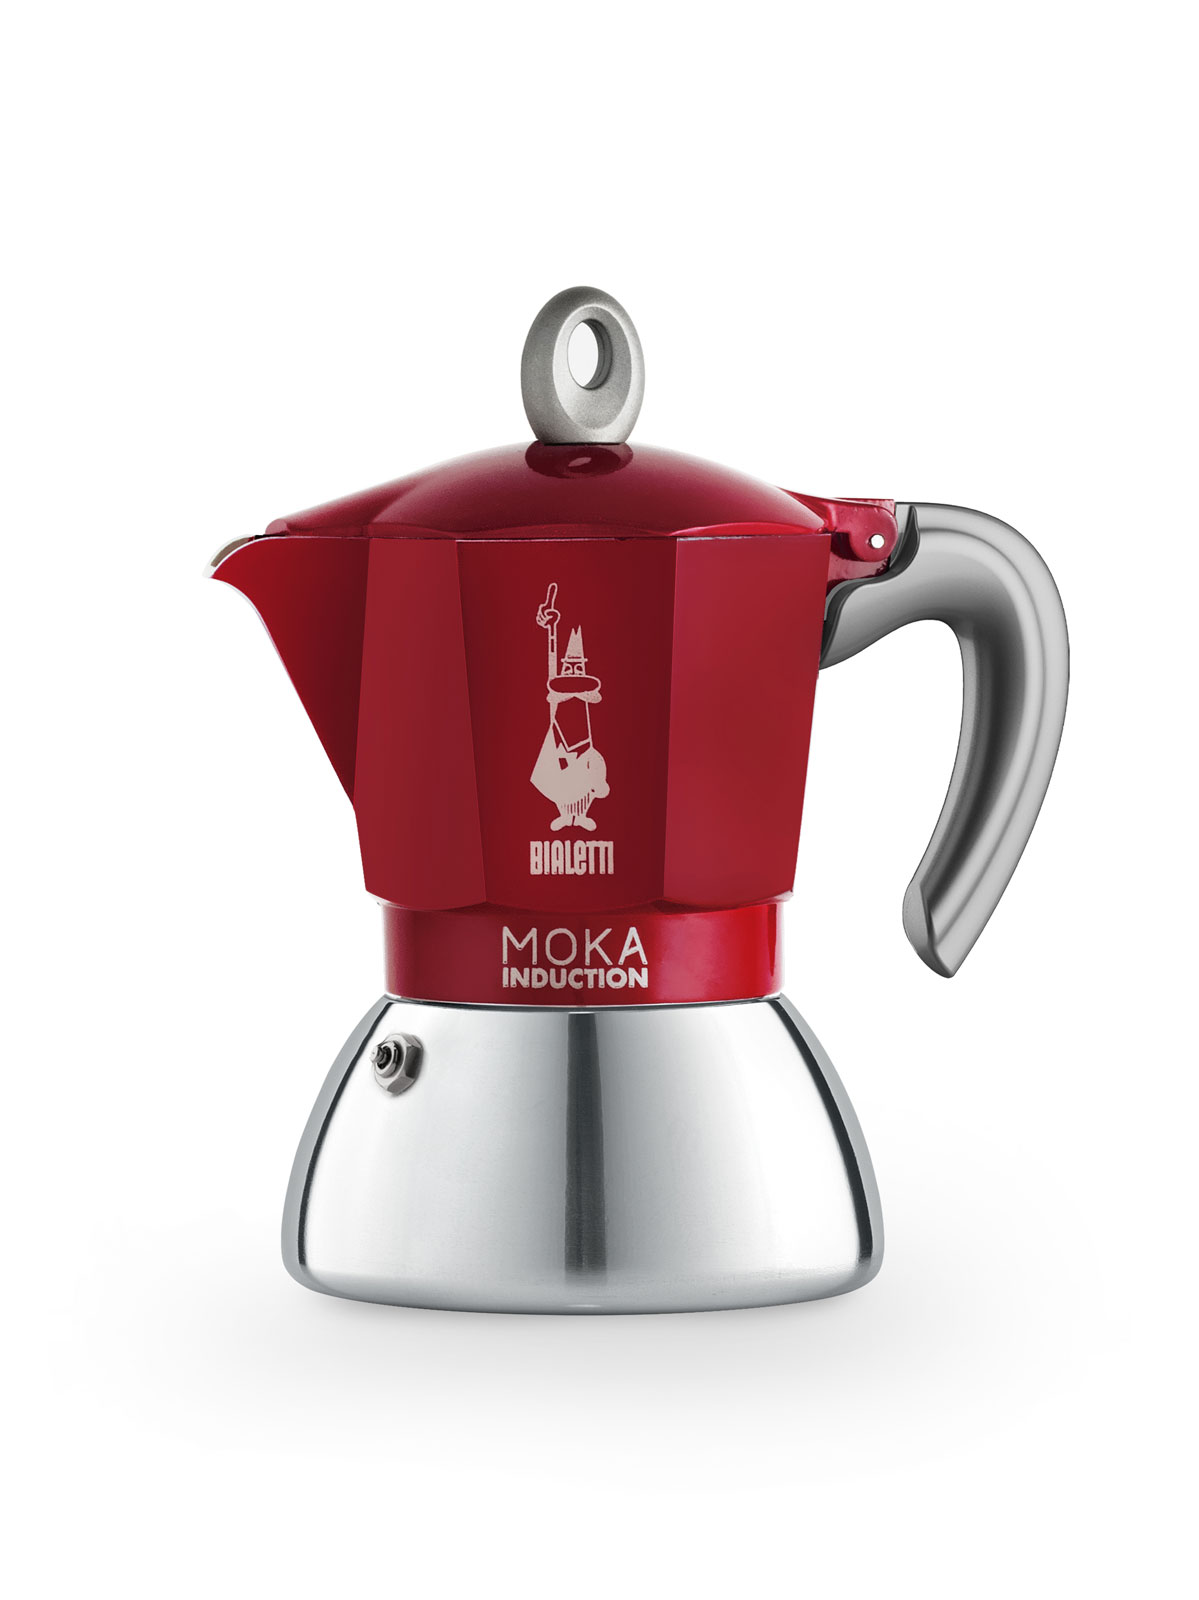 Bialetti Italien New Moka Induktion Espressokocher Red 4 Tassen